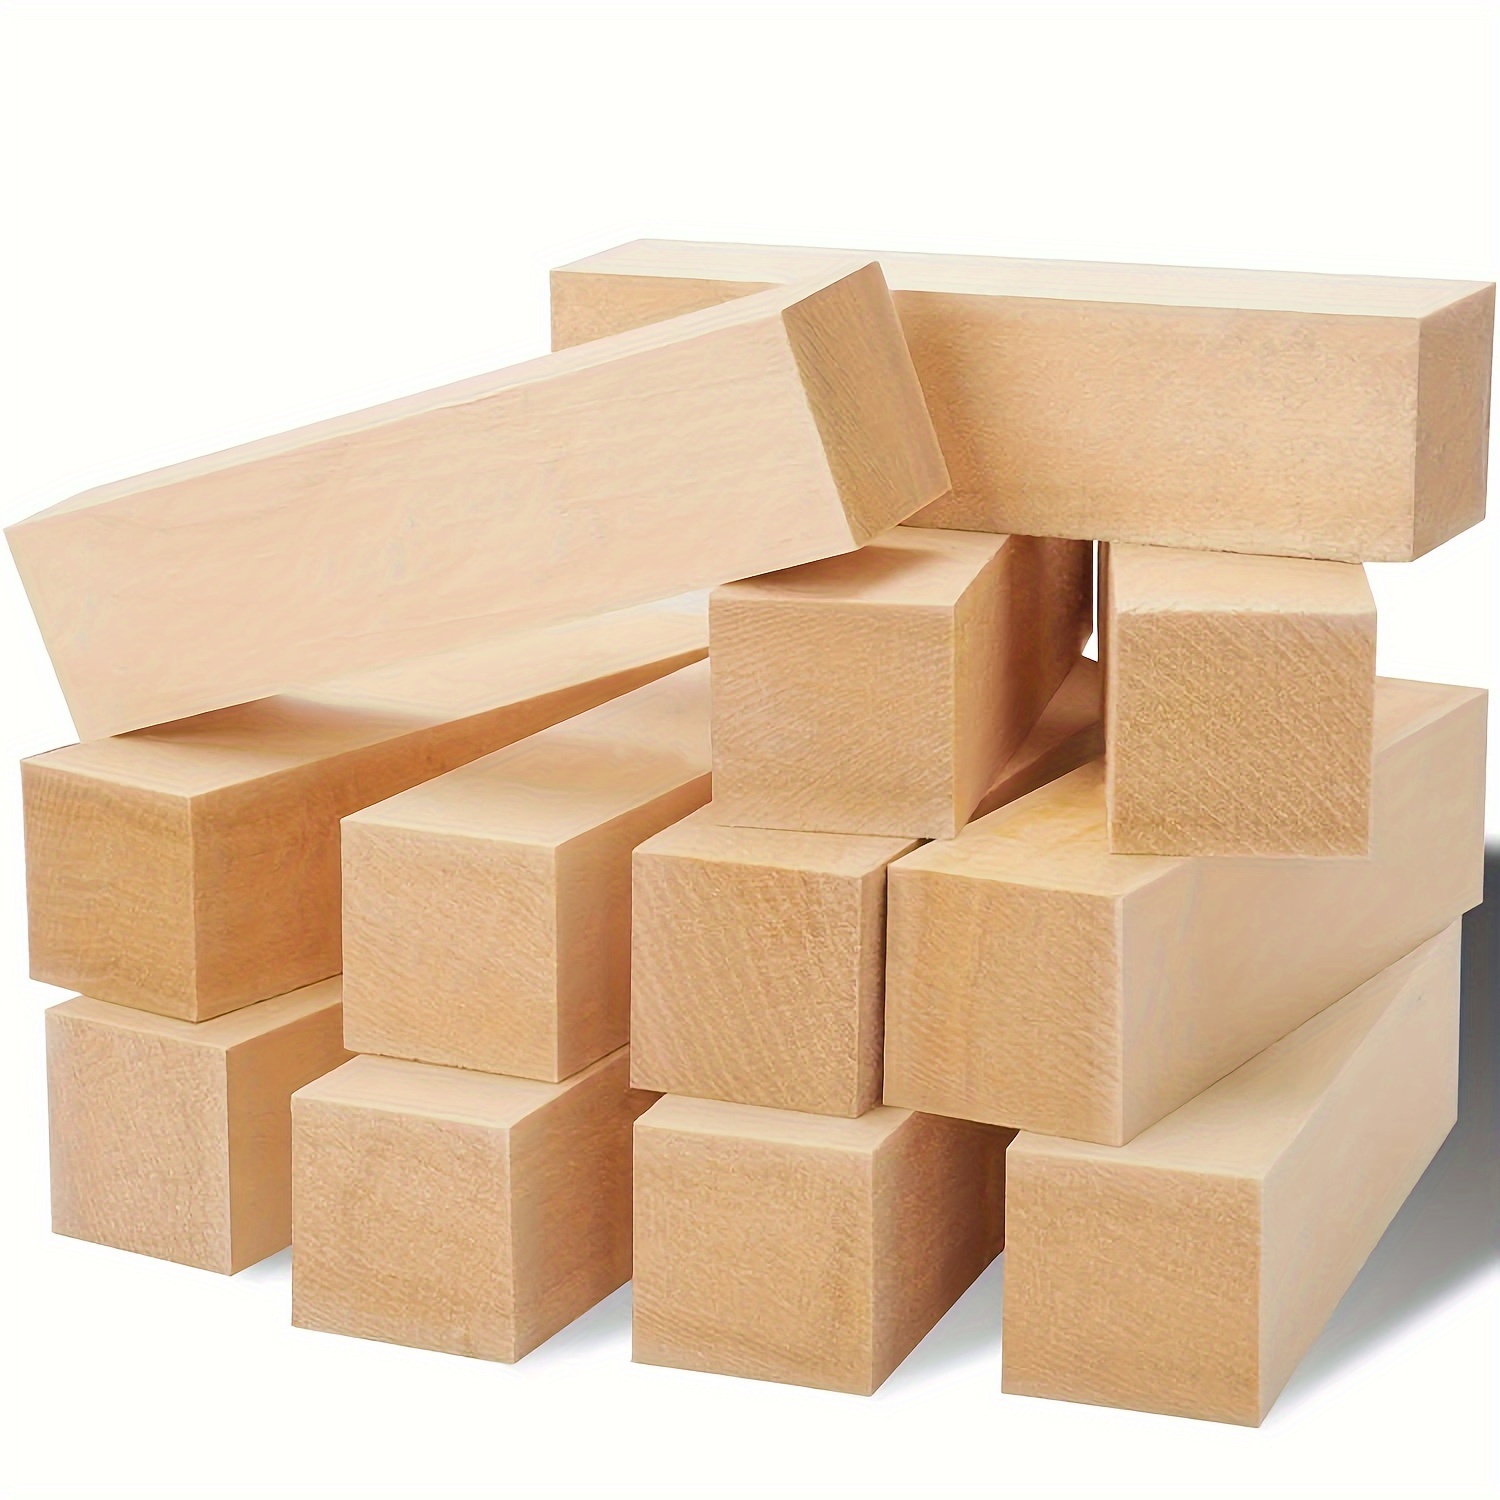 Madera de 4 pulgadas para tallar, 12 cubos de madera sin terminar, bloques  de madera rectangulares para tallar, manualidades y tallar para adultos